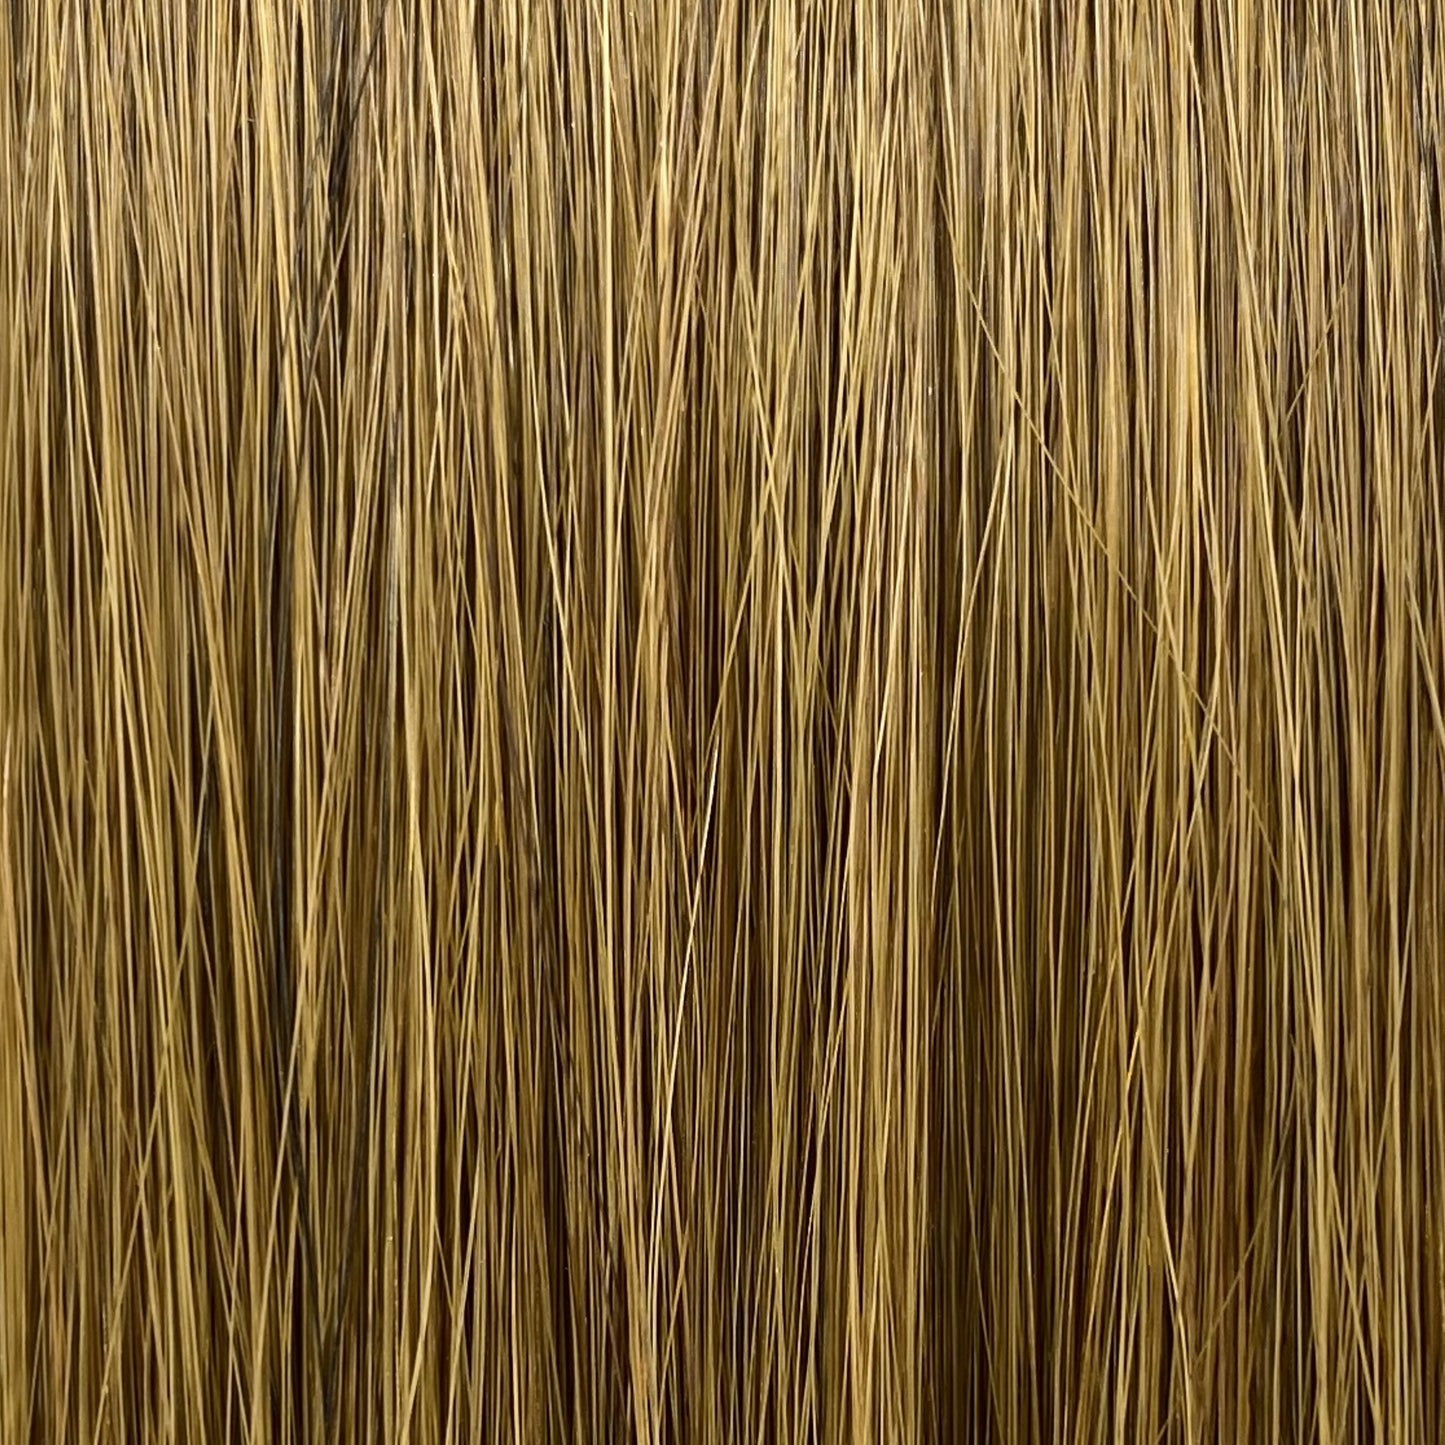 Fusion hair extensions #12 - 40cm/16 inches - Copper Golden Blonde Fusion Euro So Cap 